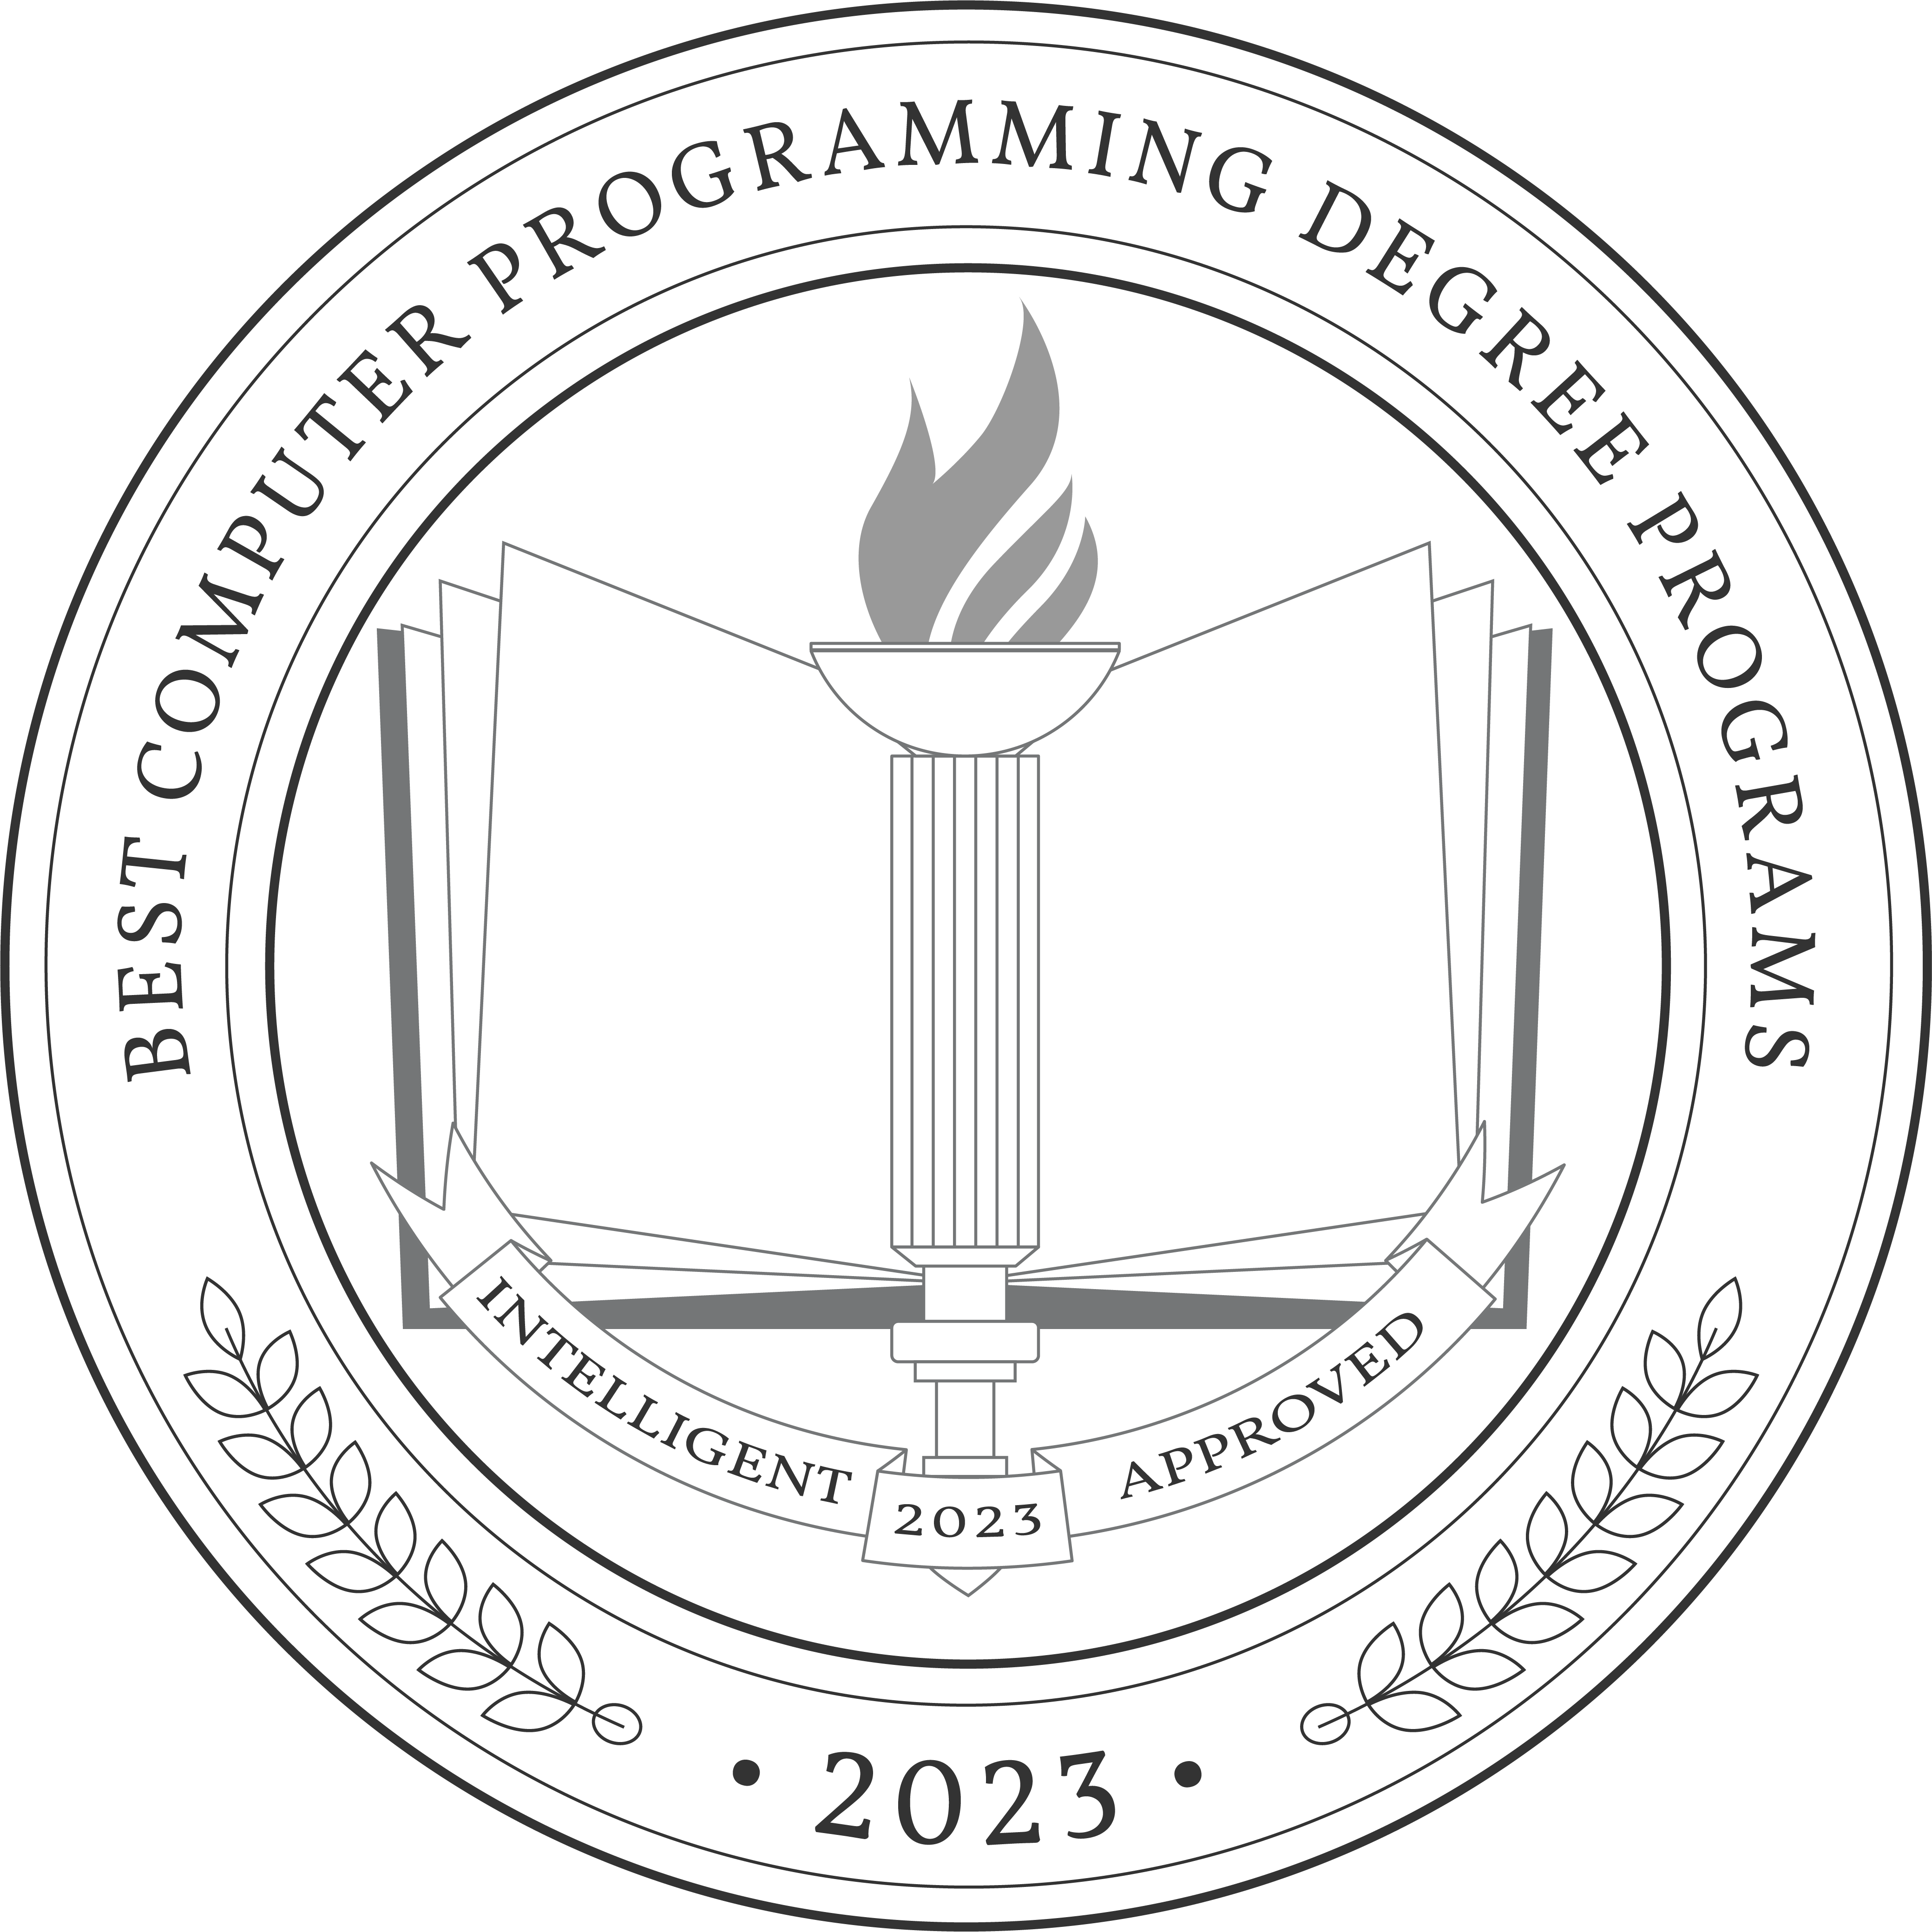 Best Computer Programming Degree Programs 2023